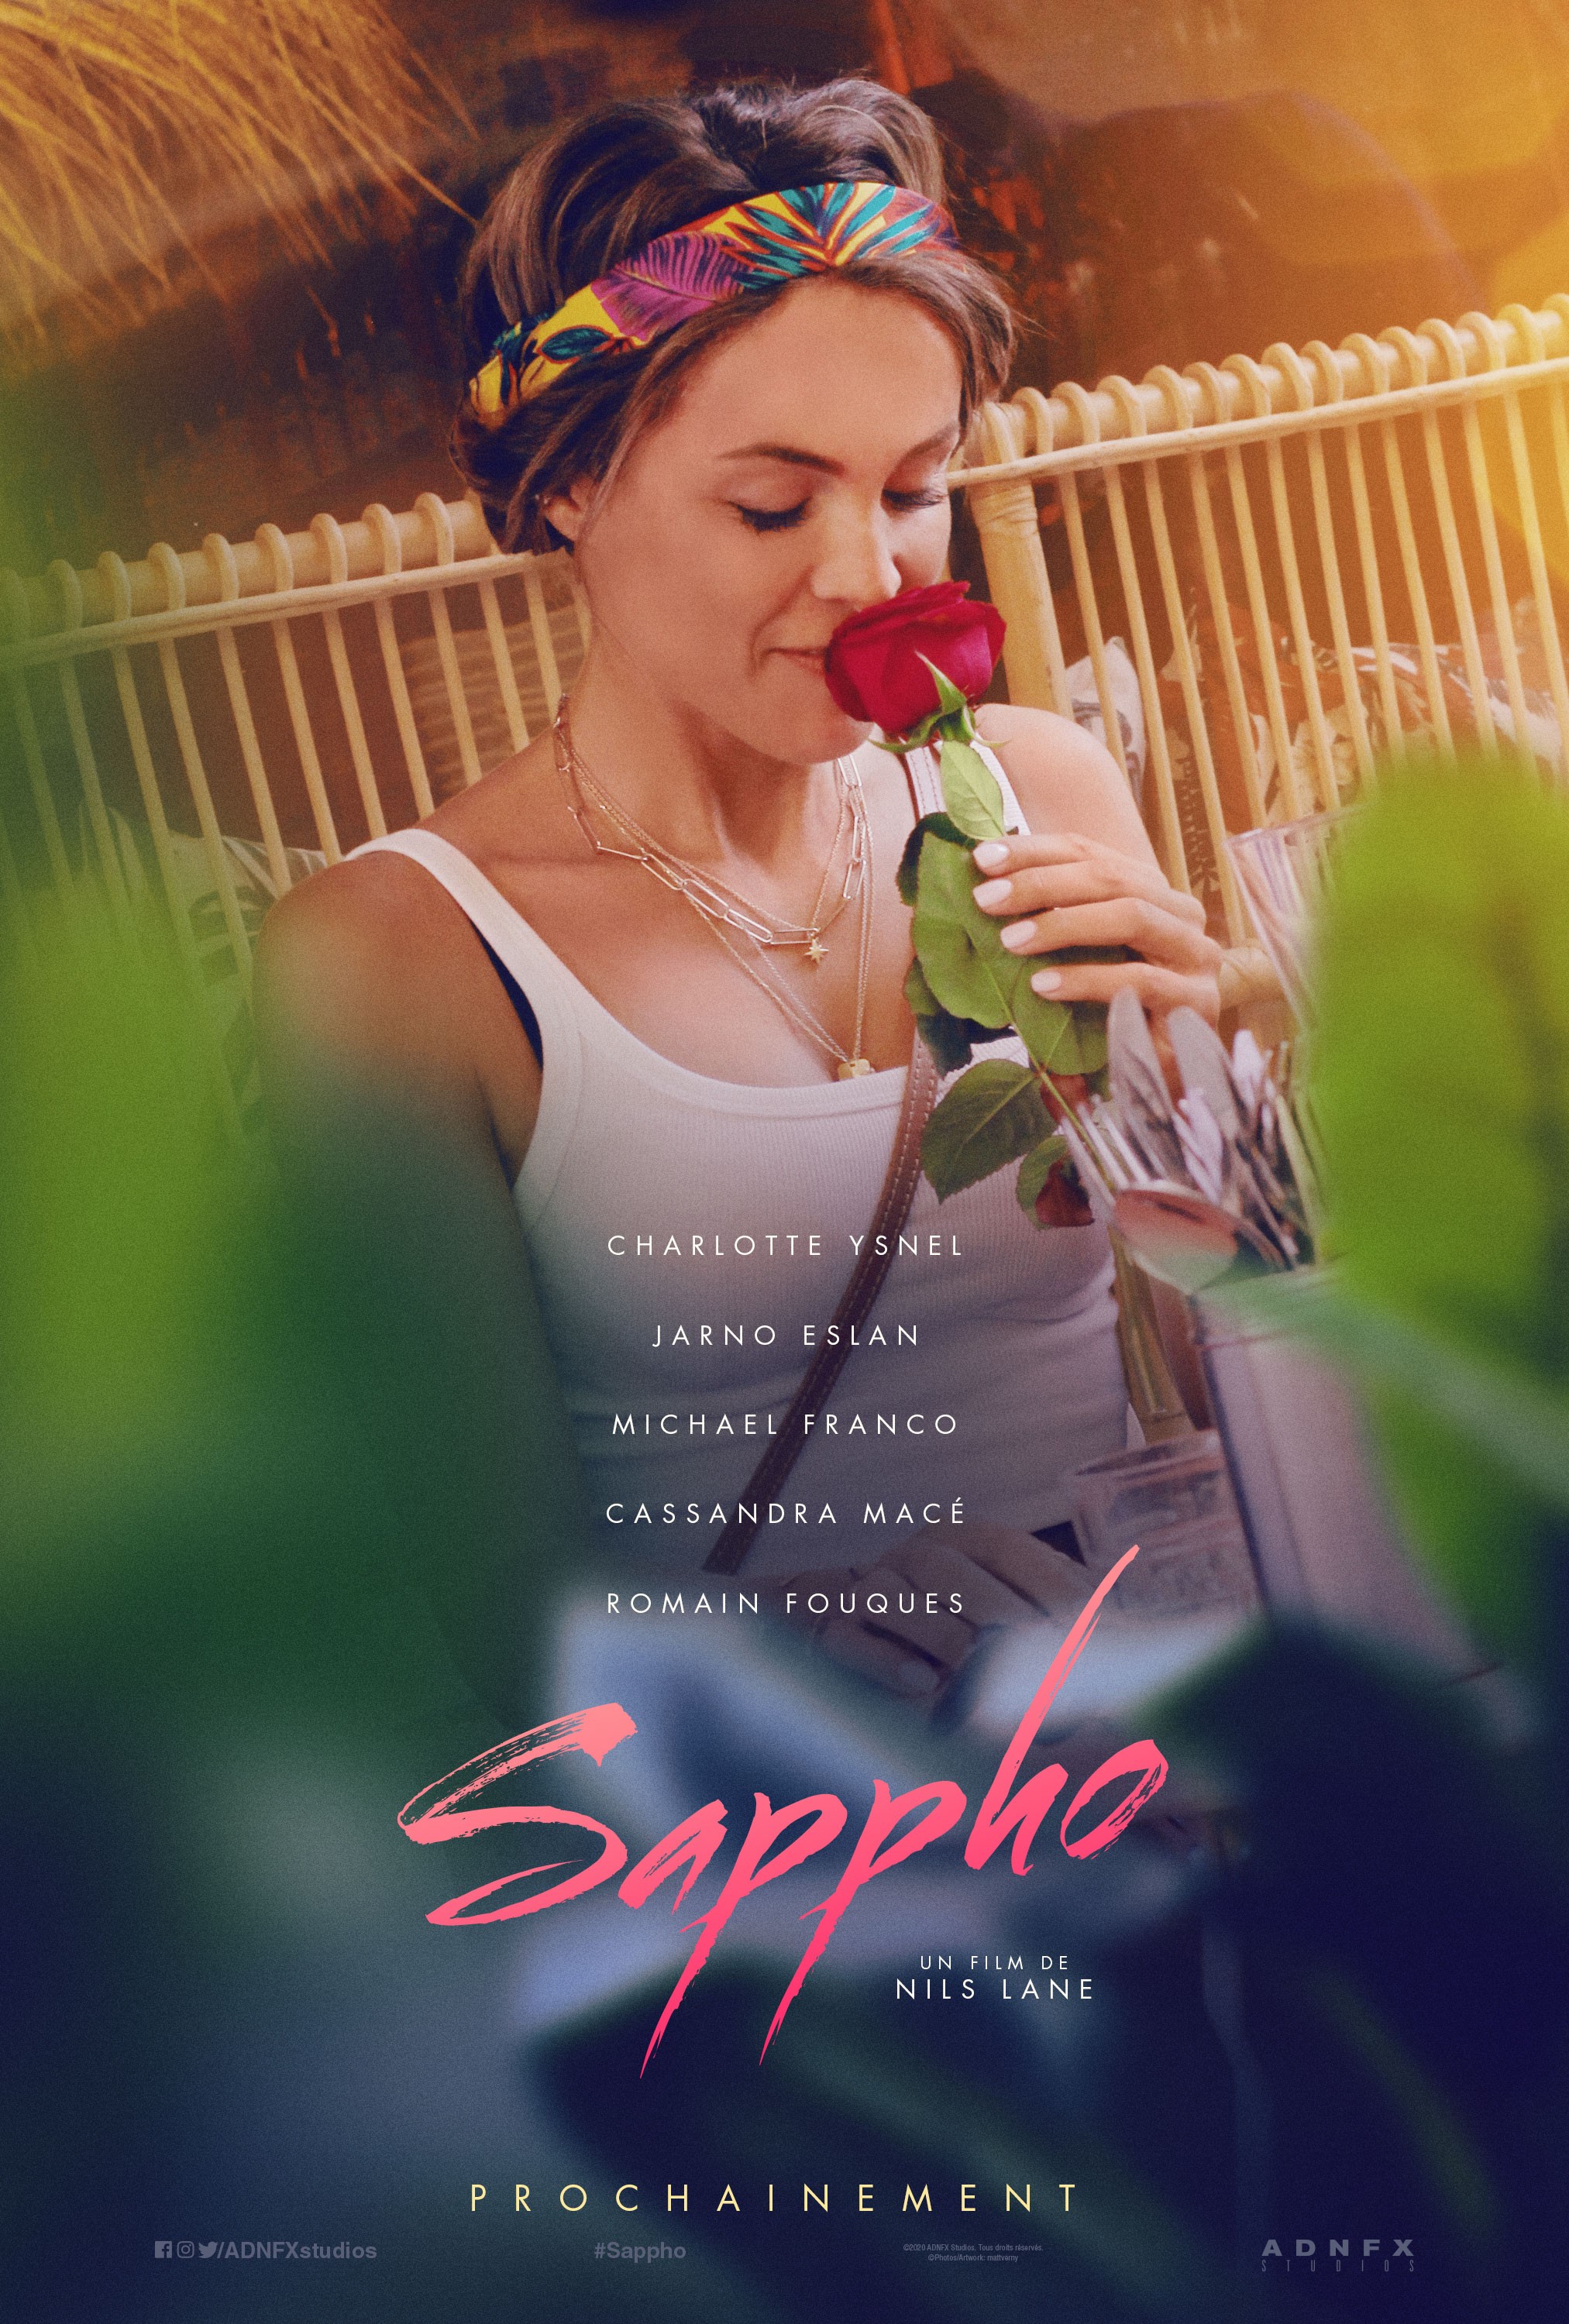 Sappho Mega Sized Movie Poster Image Internet Movie Poster Awards 